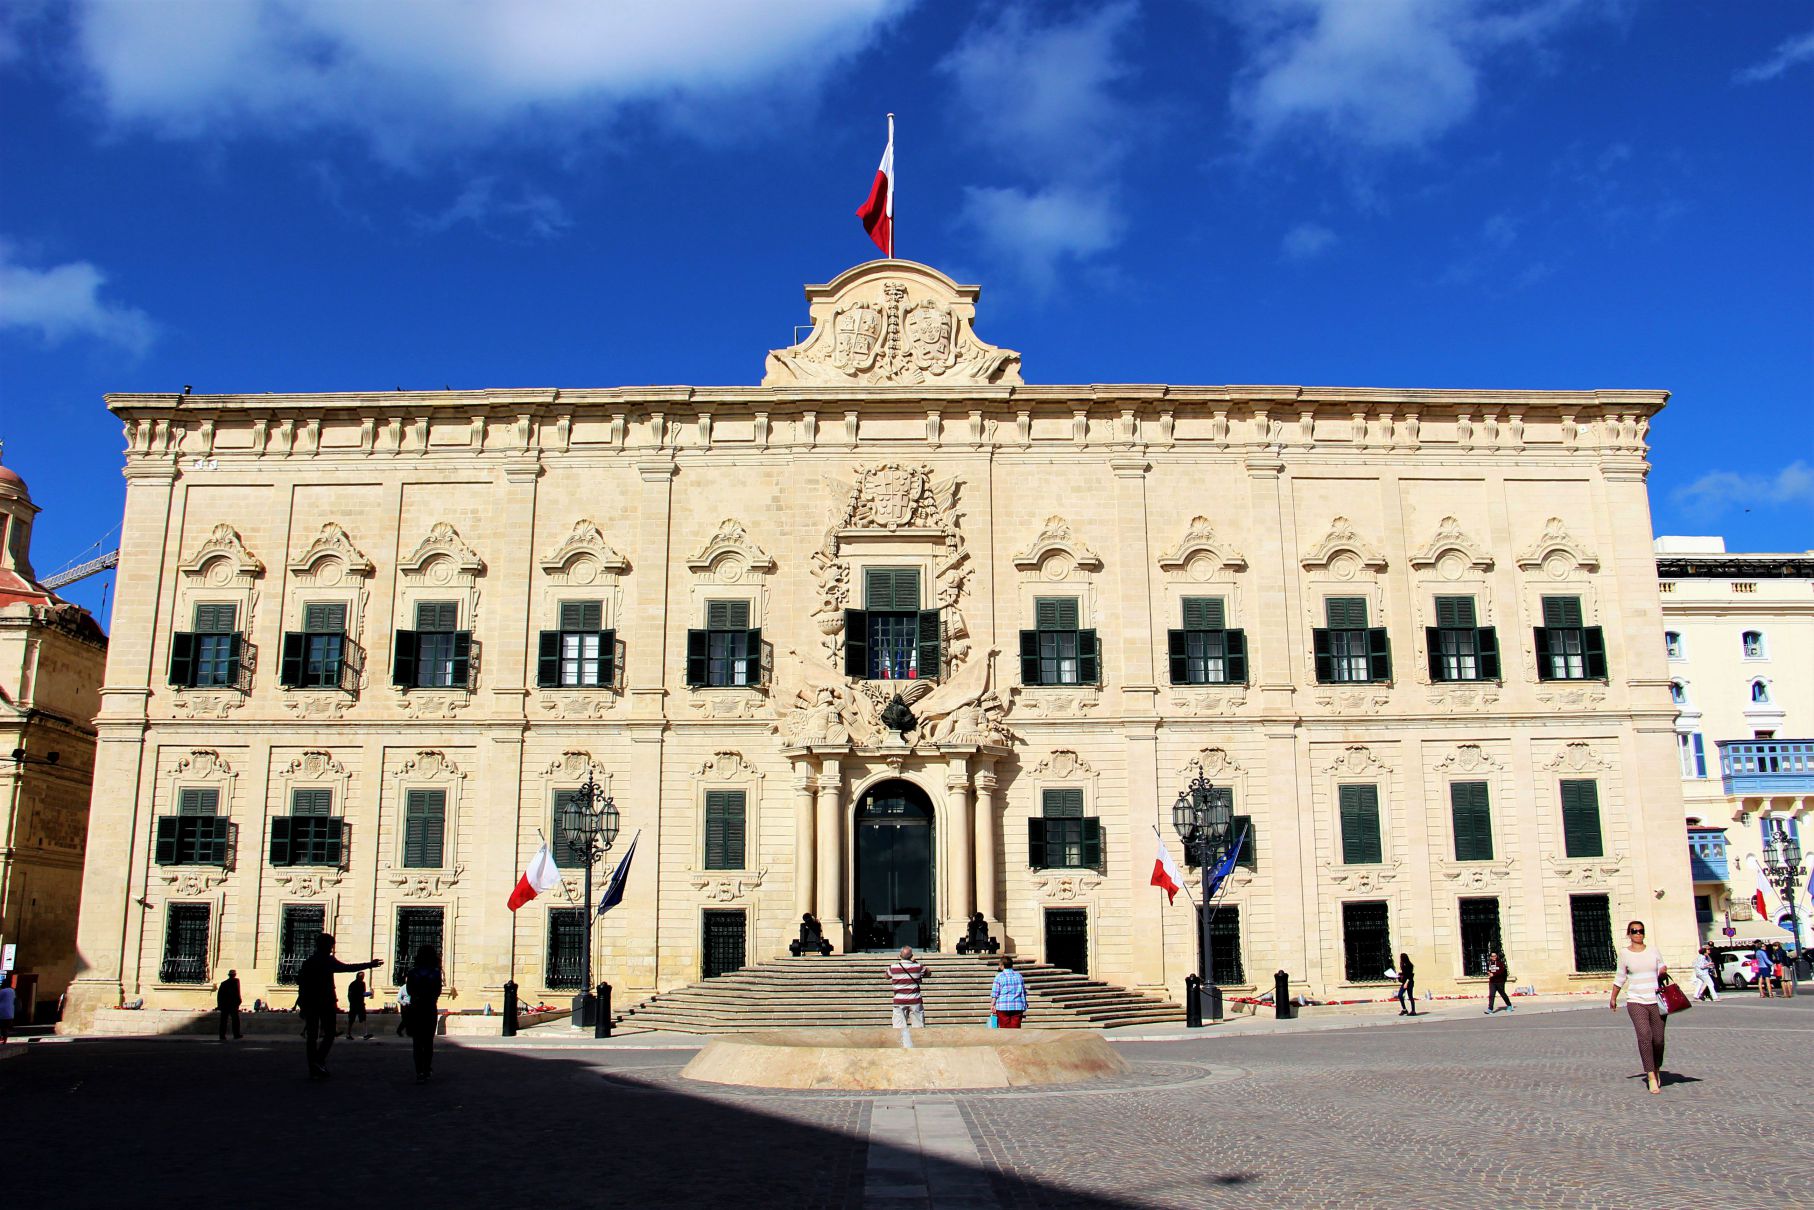 Auberge de Castille - Valletta